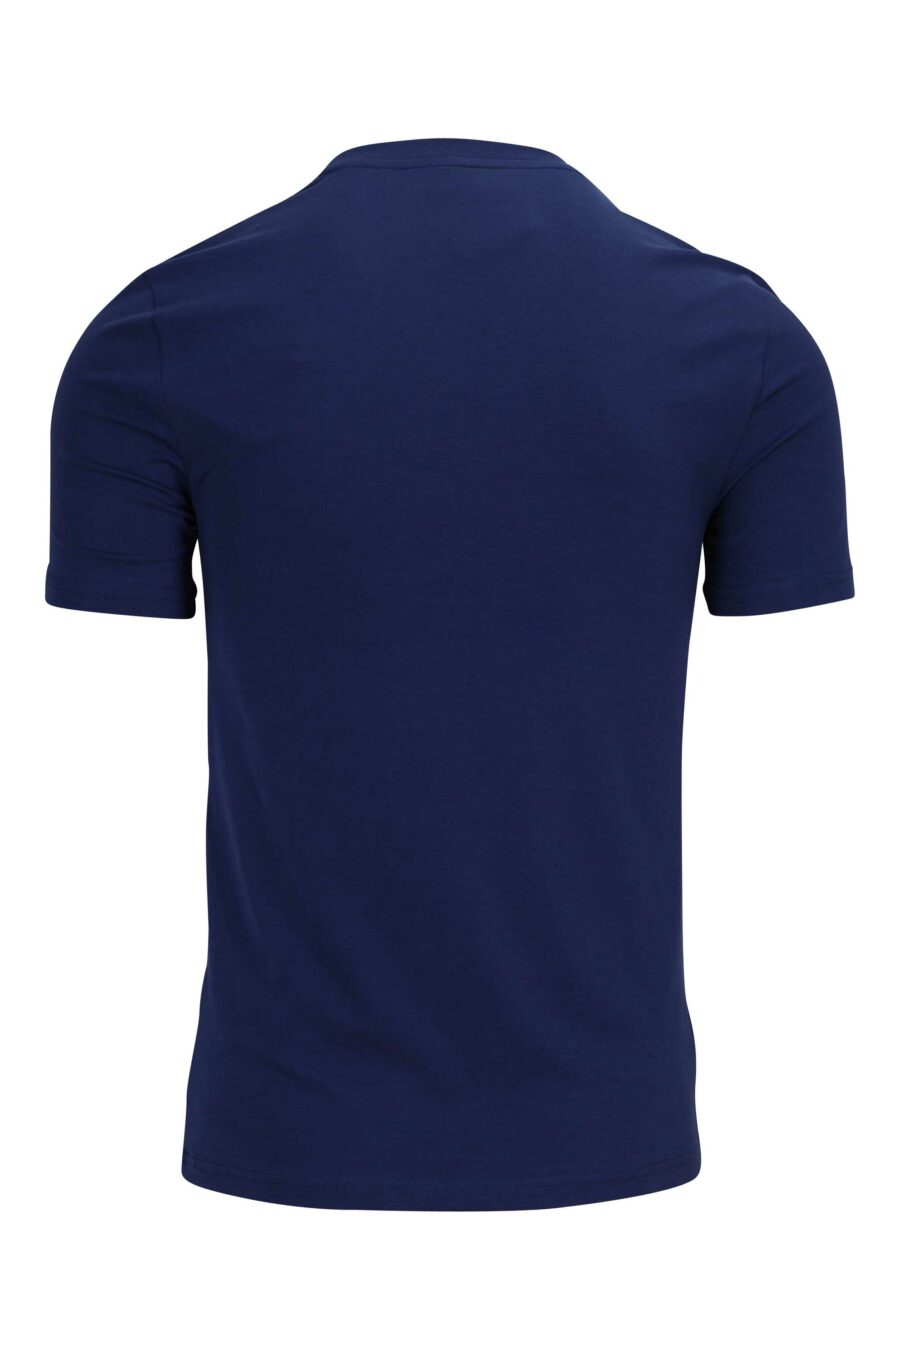 Navy blue T-shirt with black maxilogue - 889316649383 1